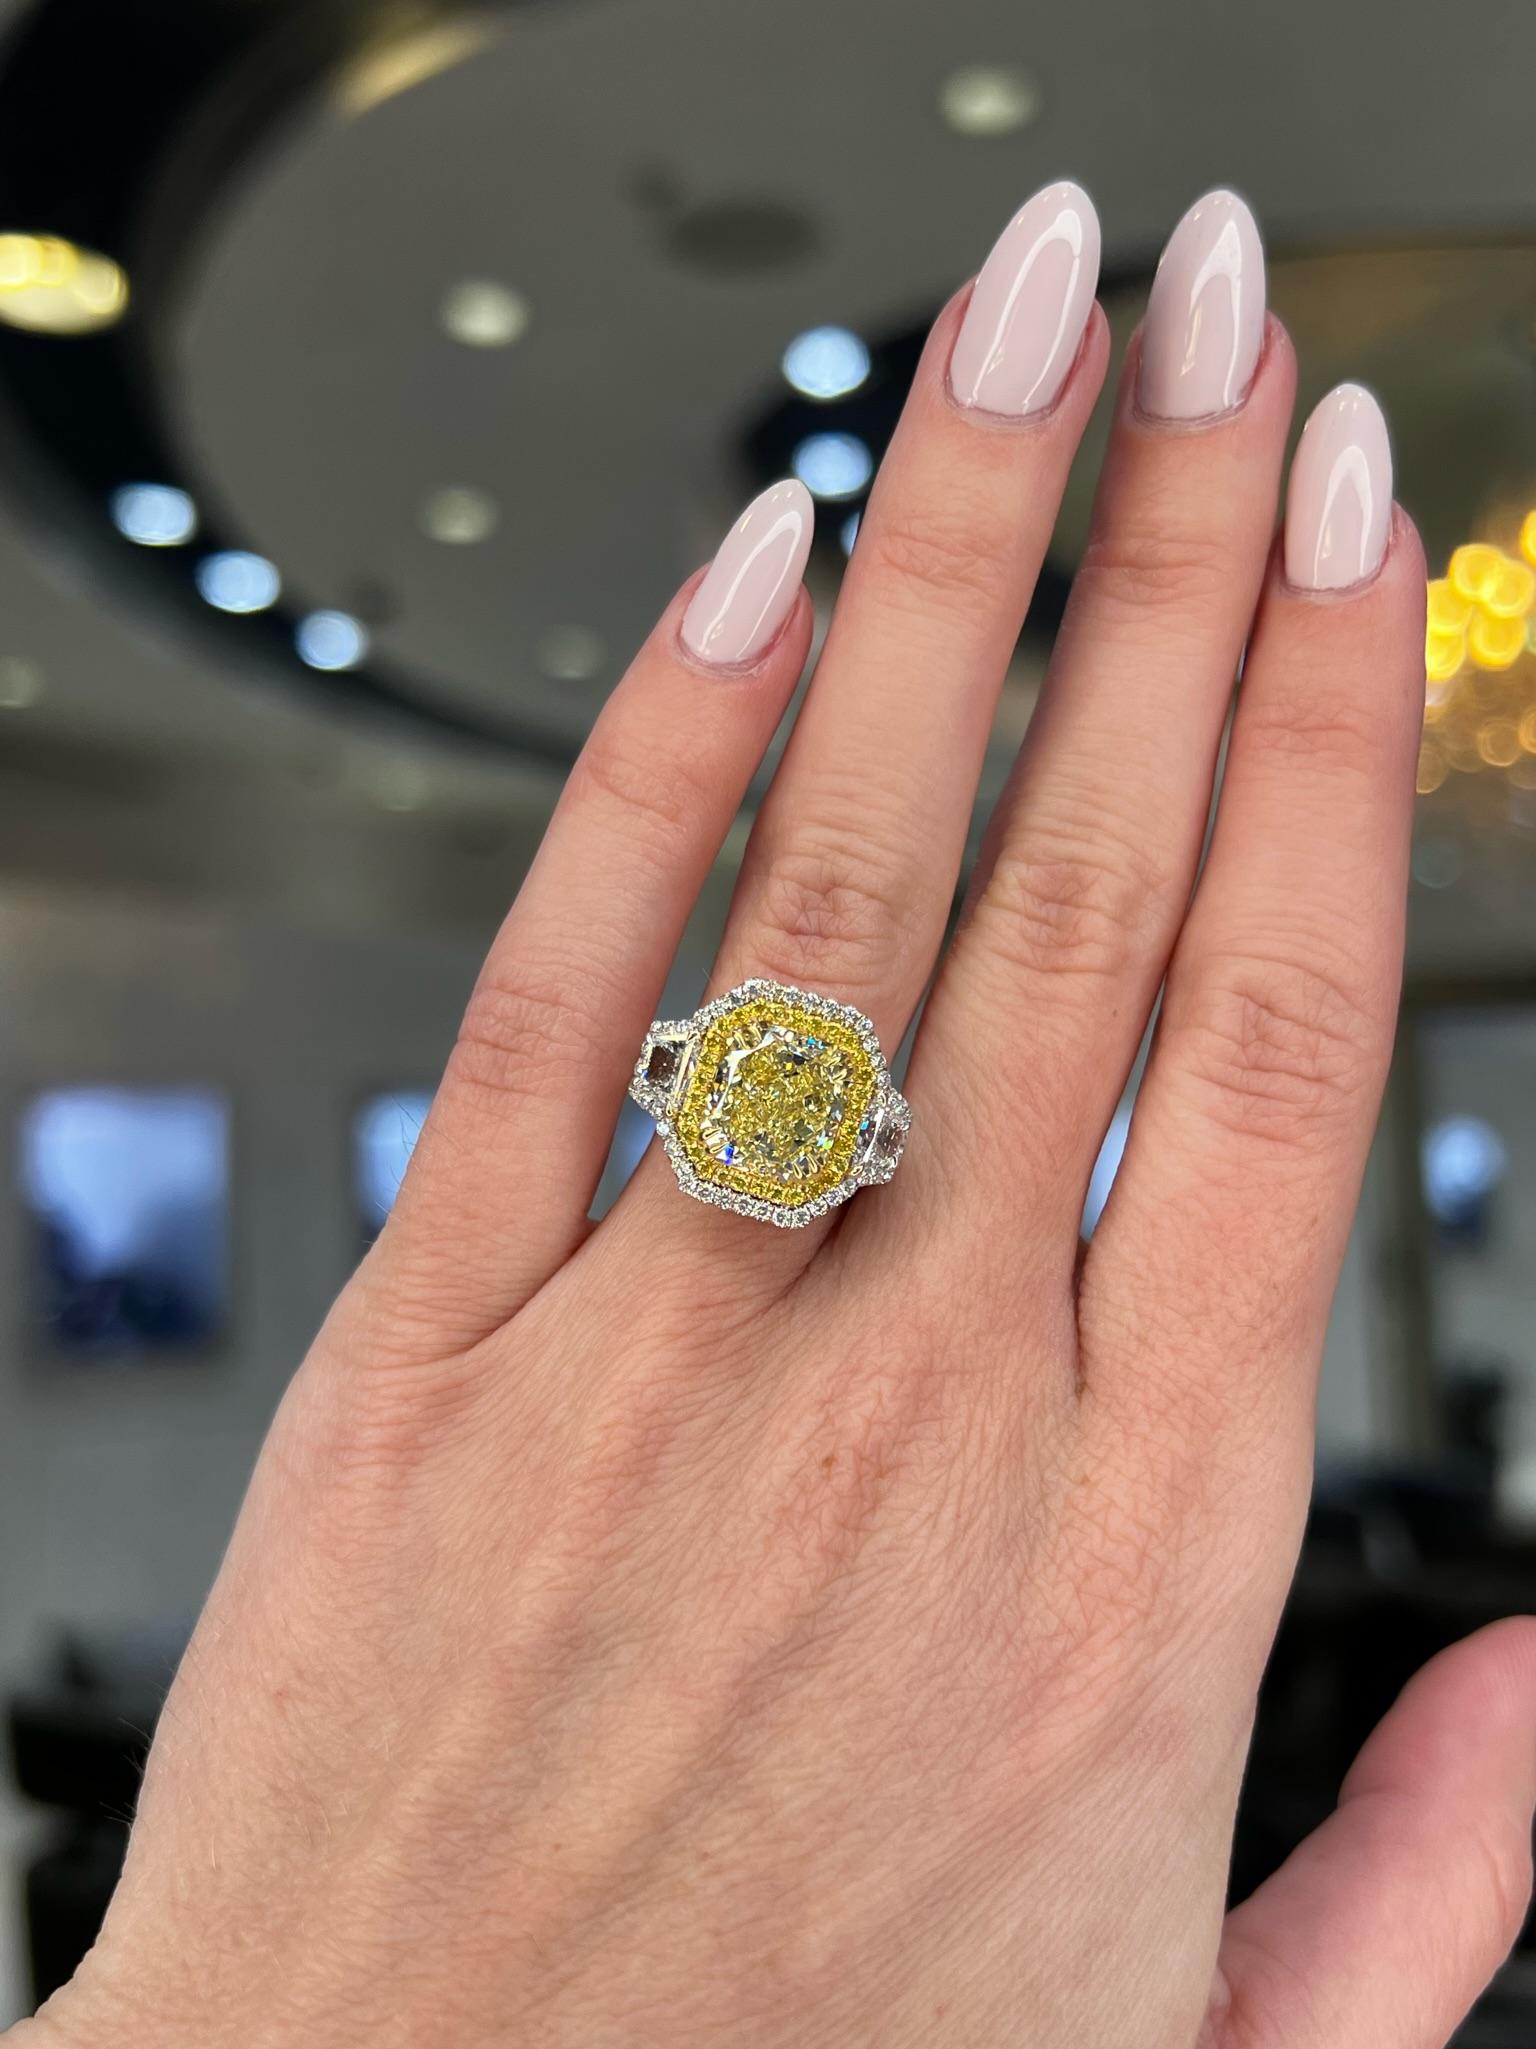 David Rosenberg 3.67 Carat Radiant Fancy Yellow VVS2 GIA Diamond Engagement Ring For Sale 6